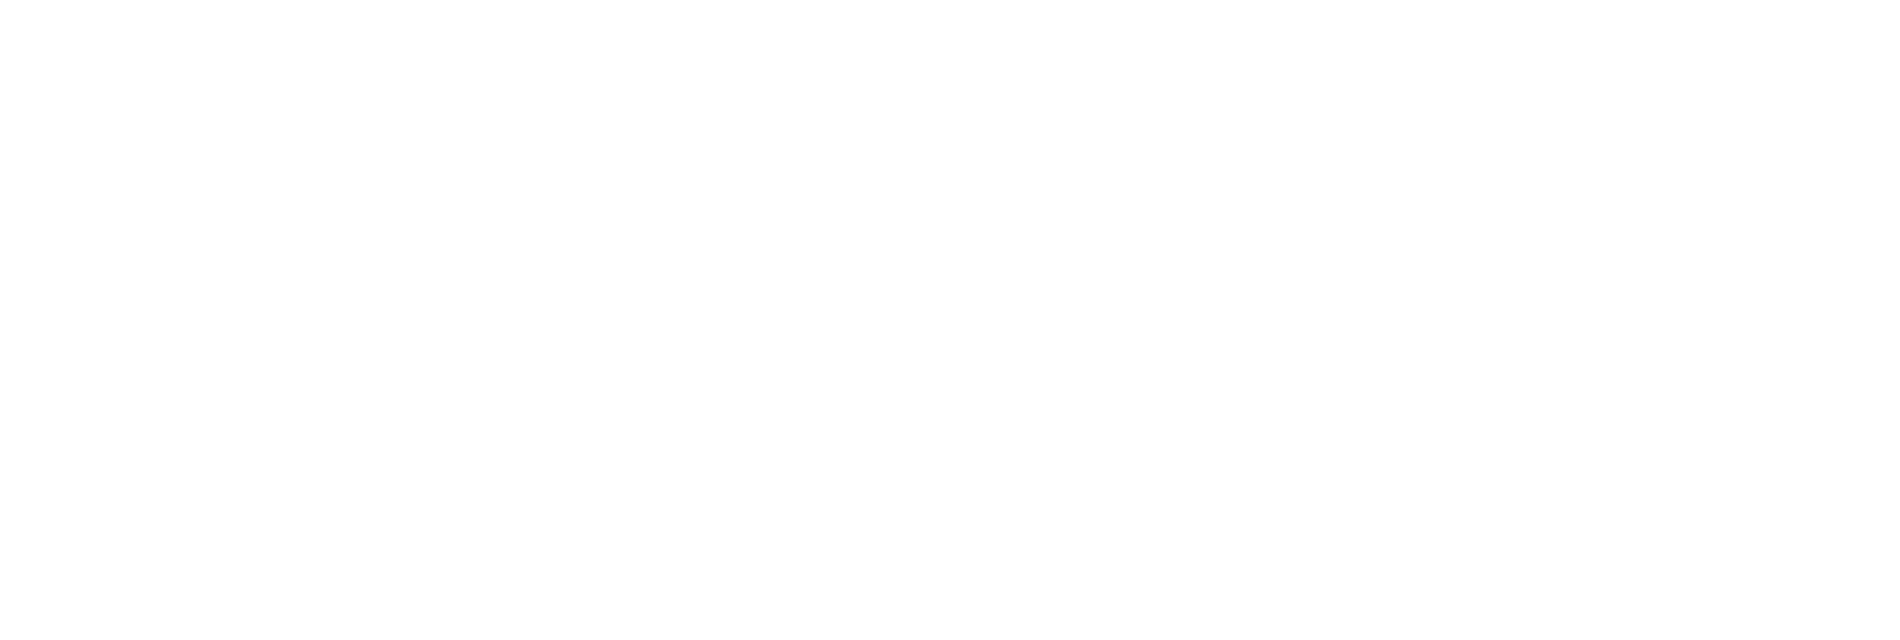 Roppongi Art Night English Guided Tour: “Lost in Art Translation”